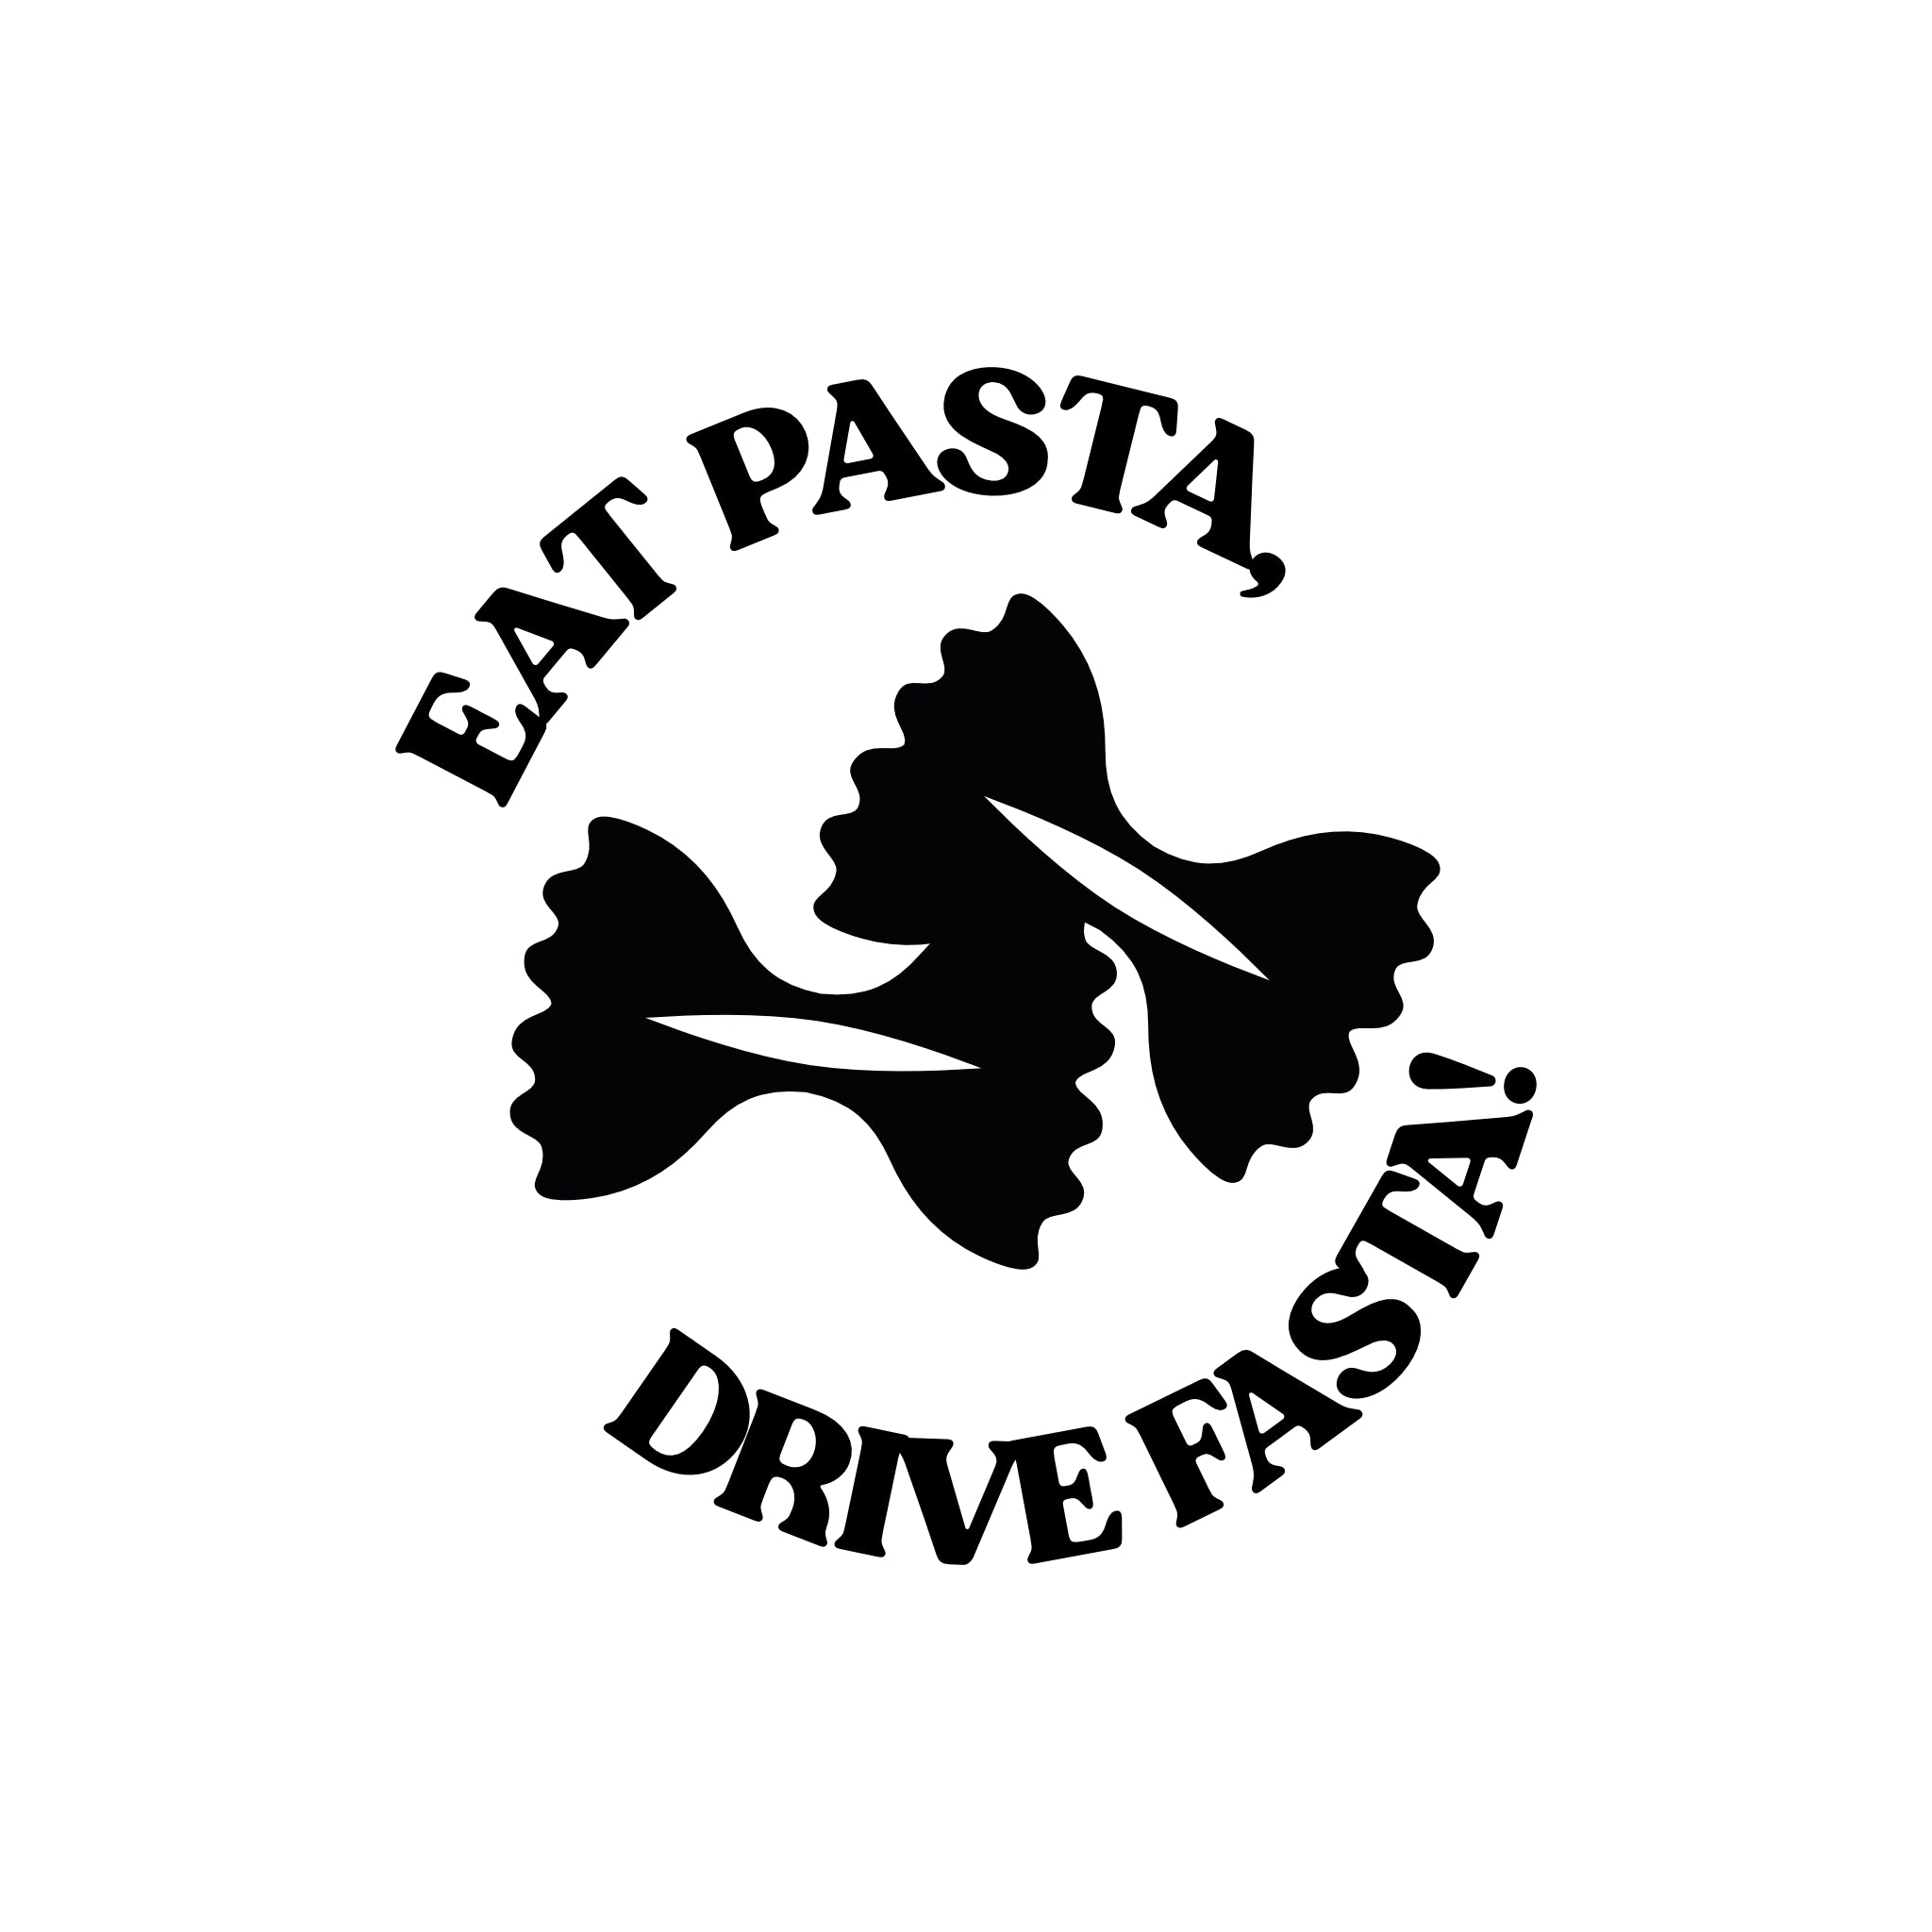 eat pasta, drive fasta sticker